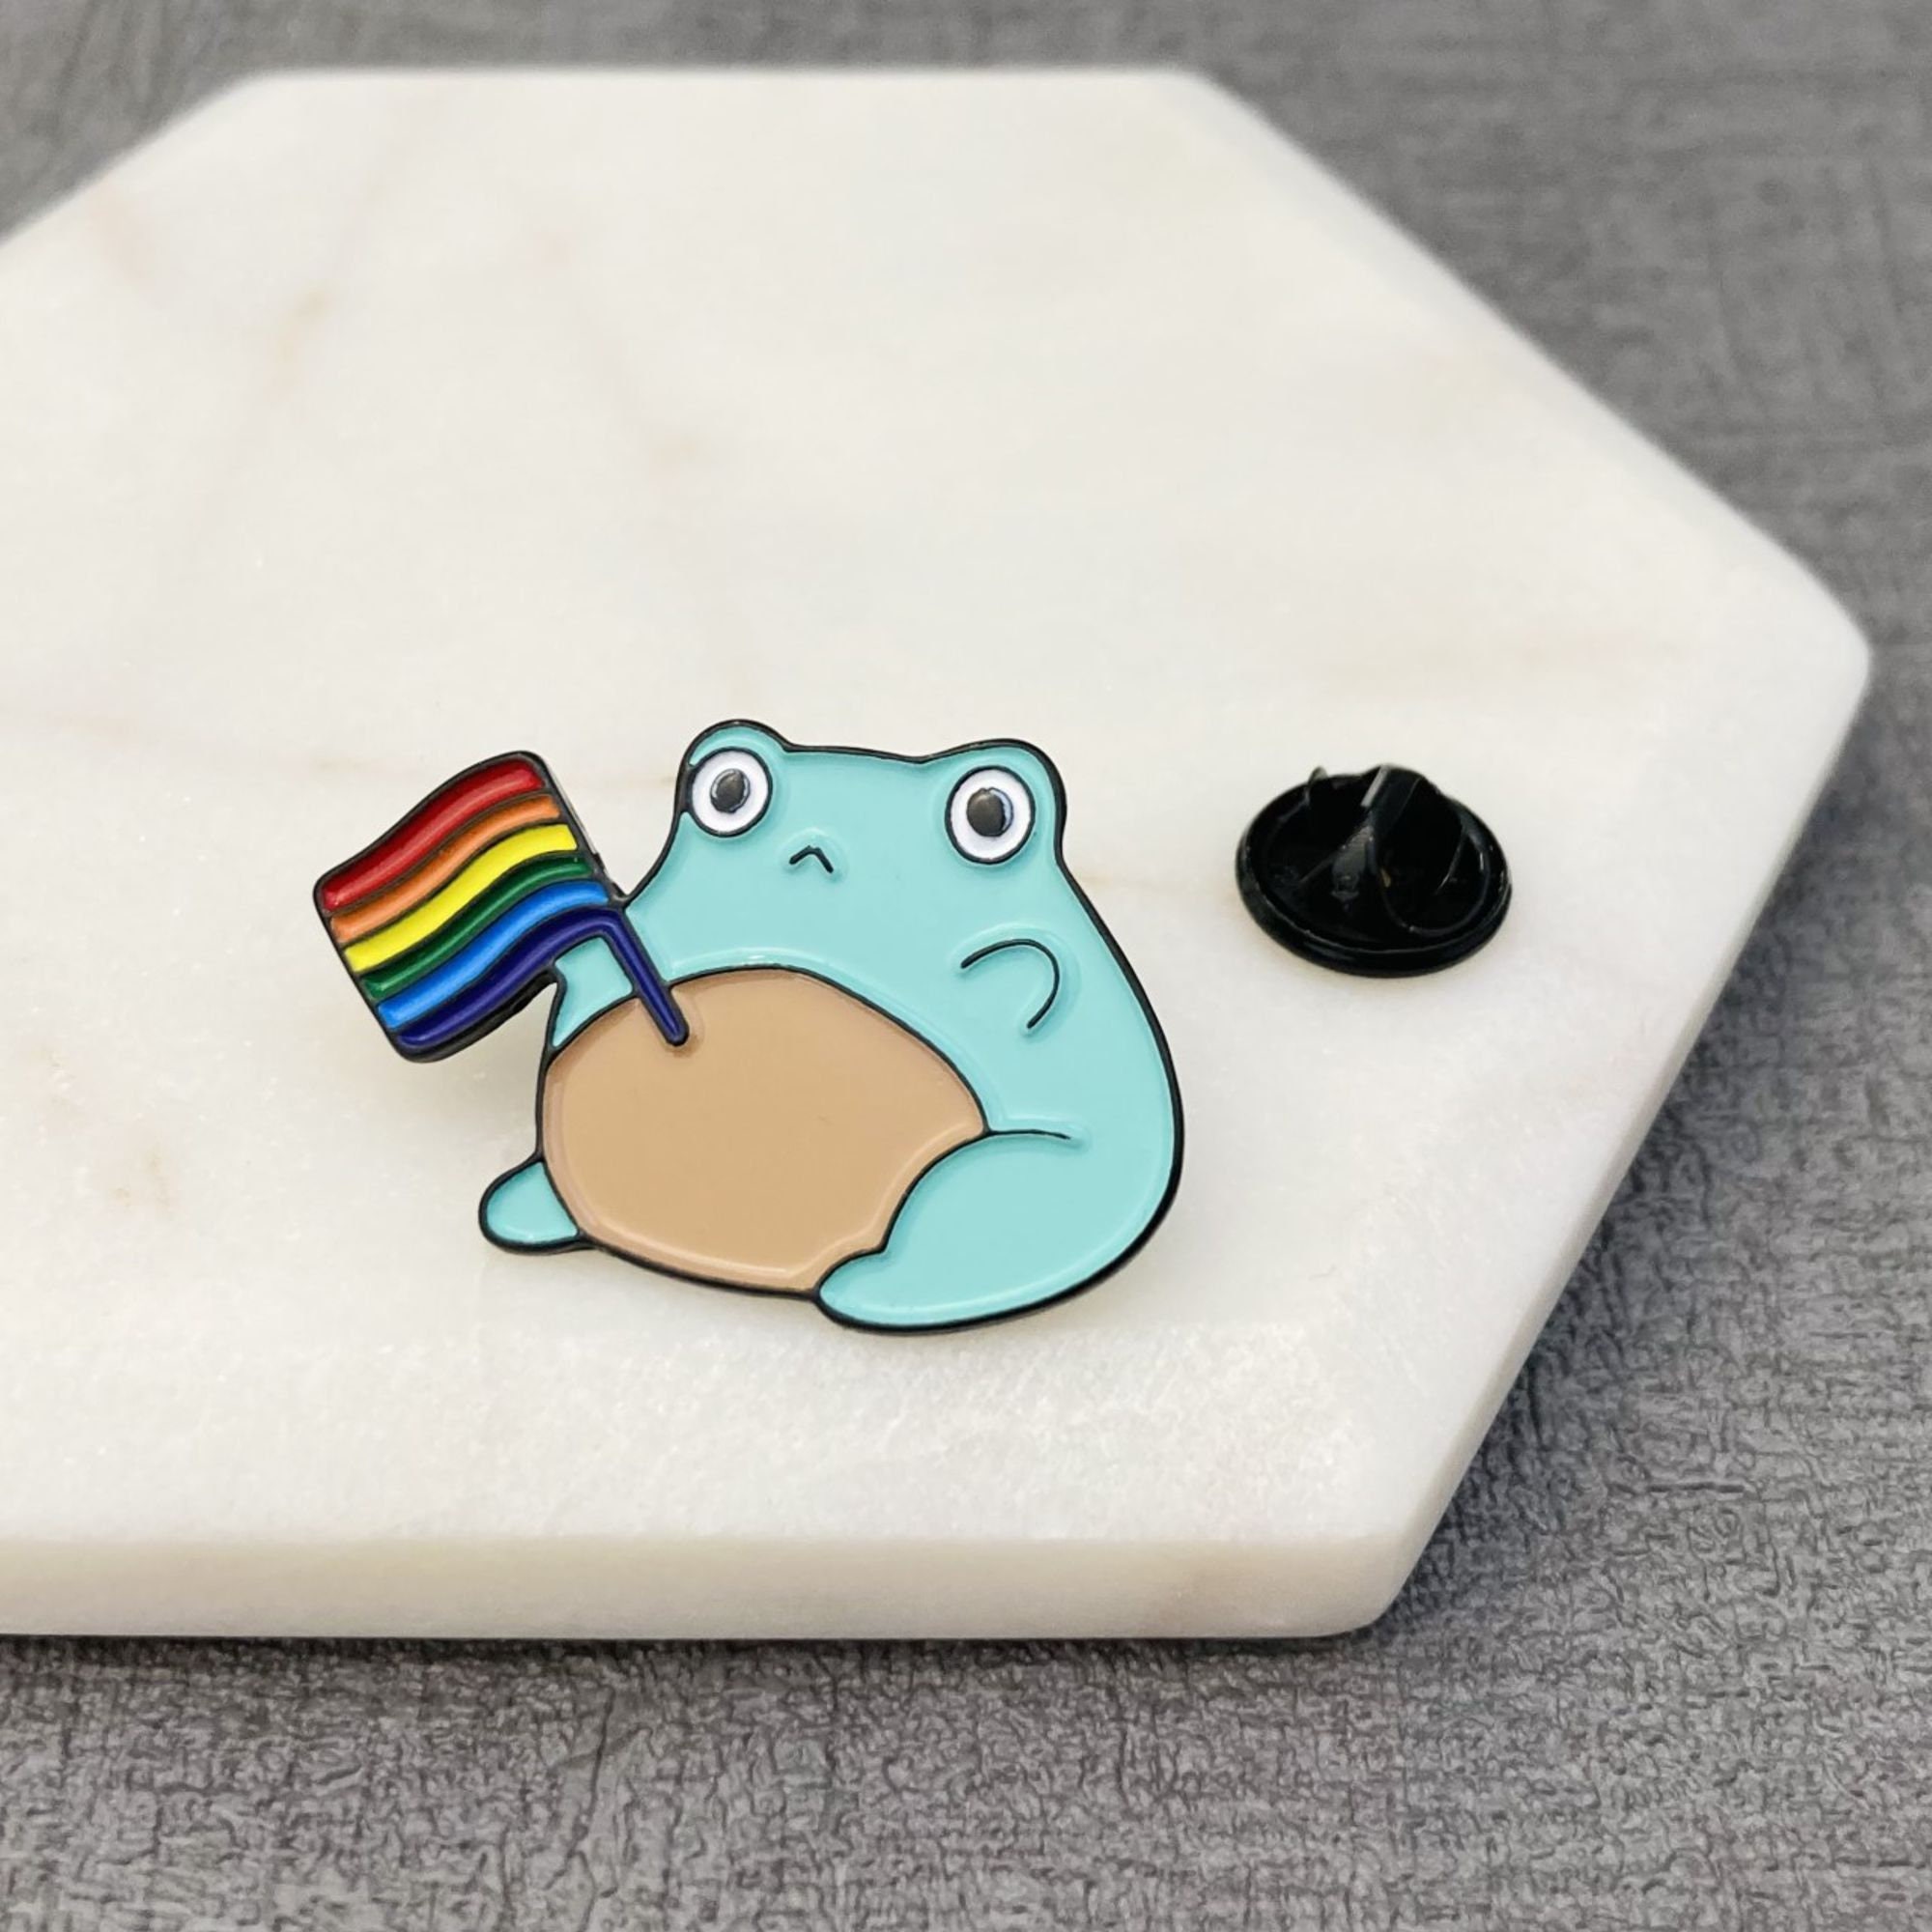 Nonbinary Pride Frog Pin  Chibi Queer Frog Enamel Pin in Non Binary P –  Hokum & Snark